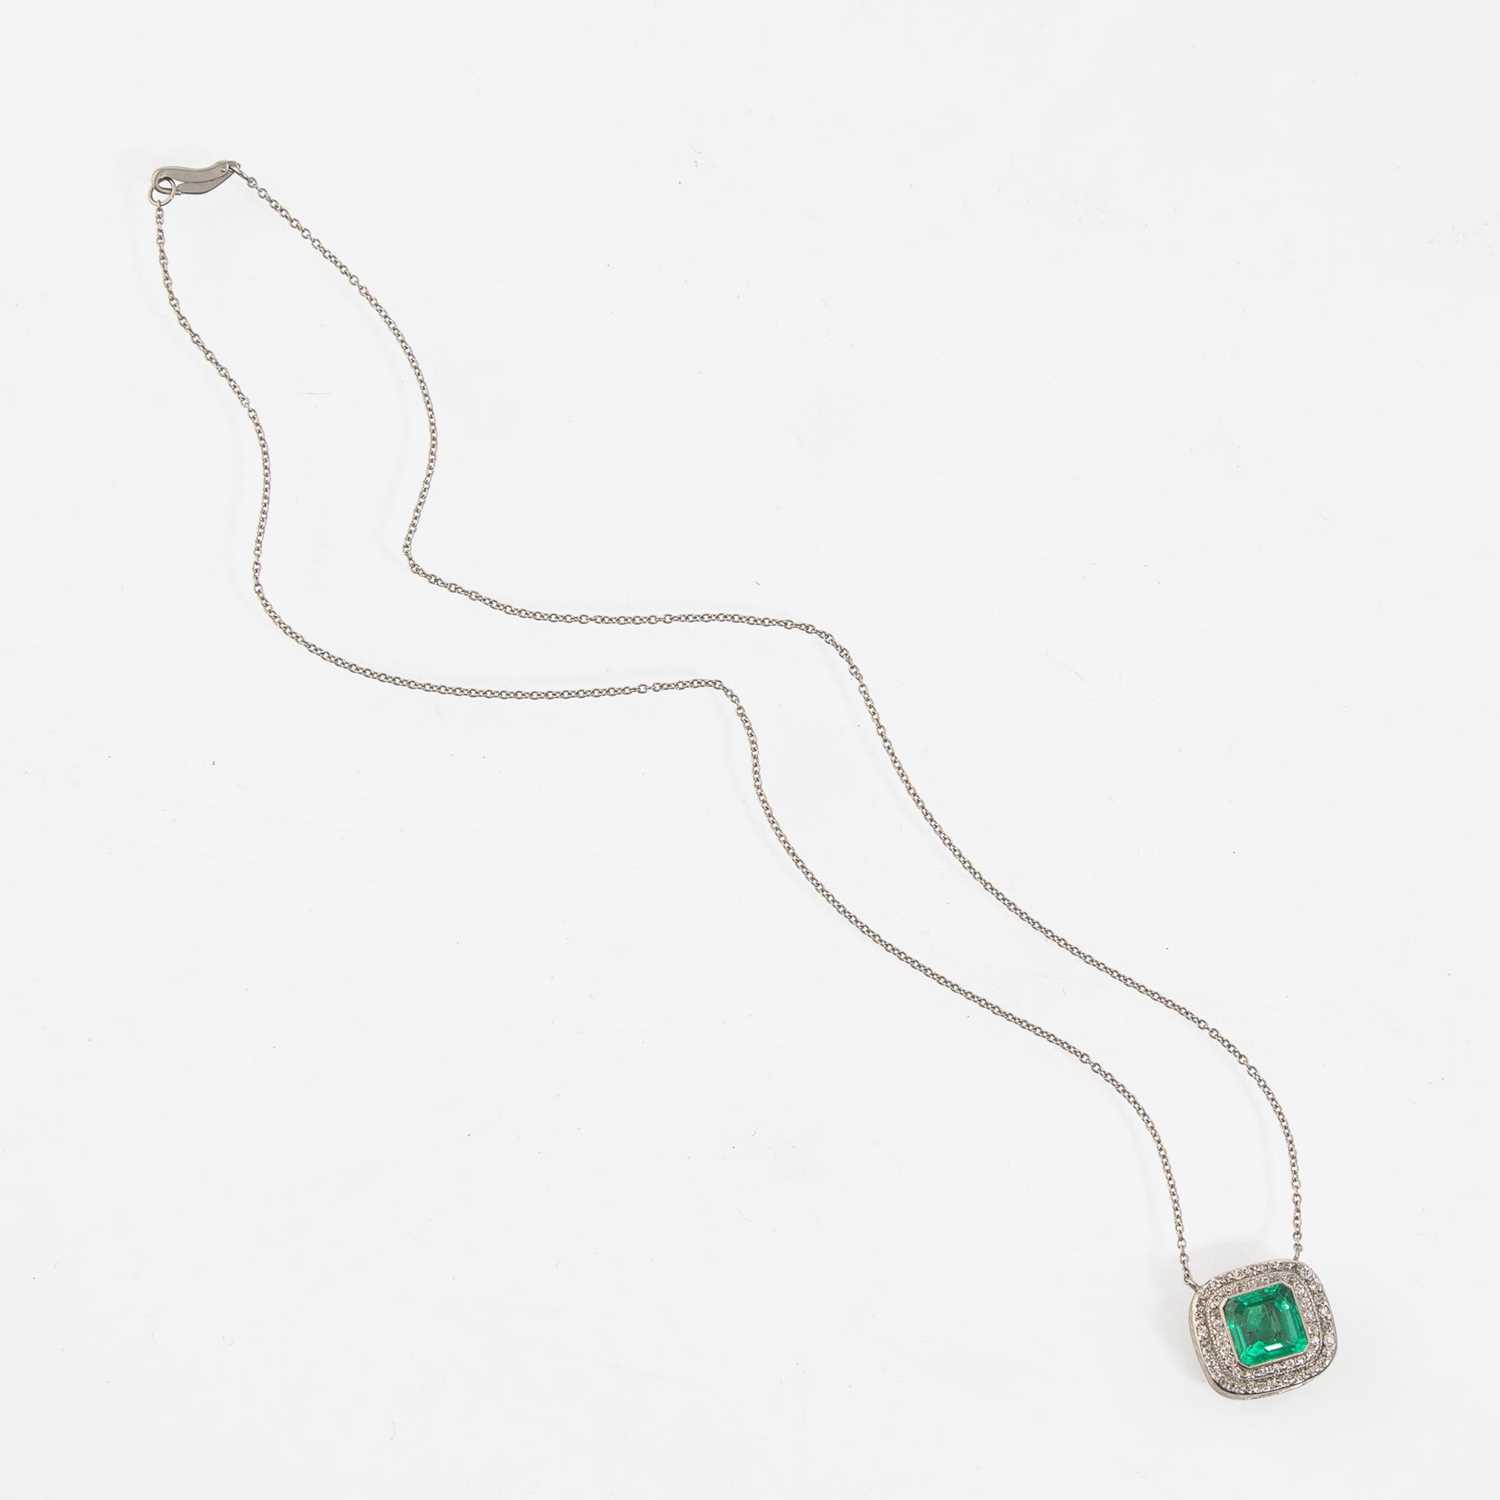 Lot 288 - A Platinum, Emerald, and Diamond Necklace